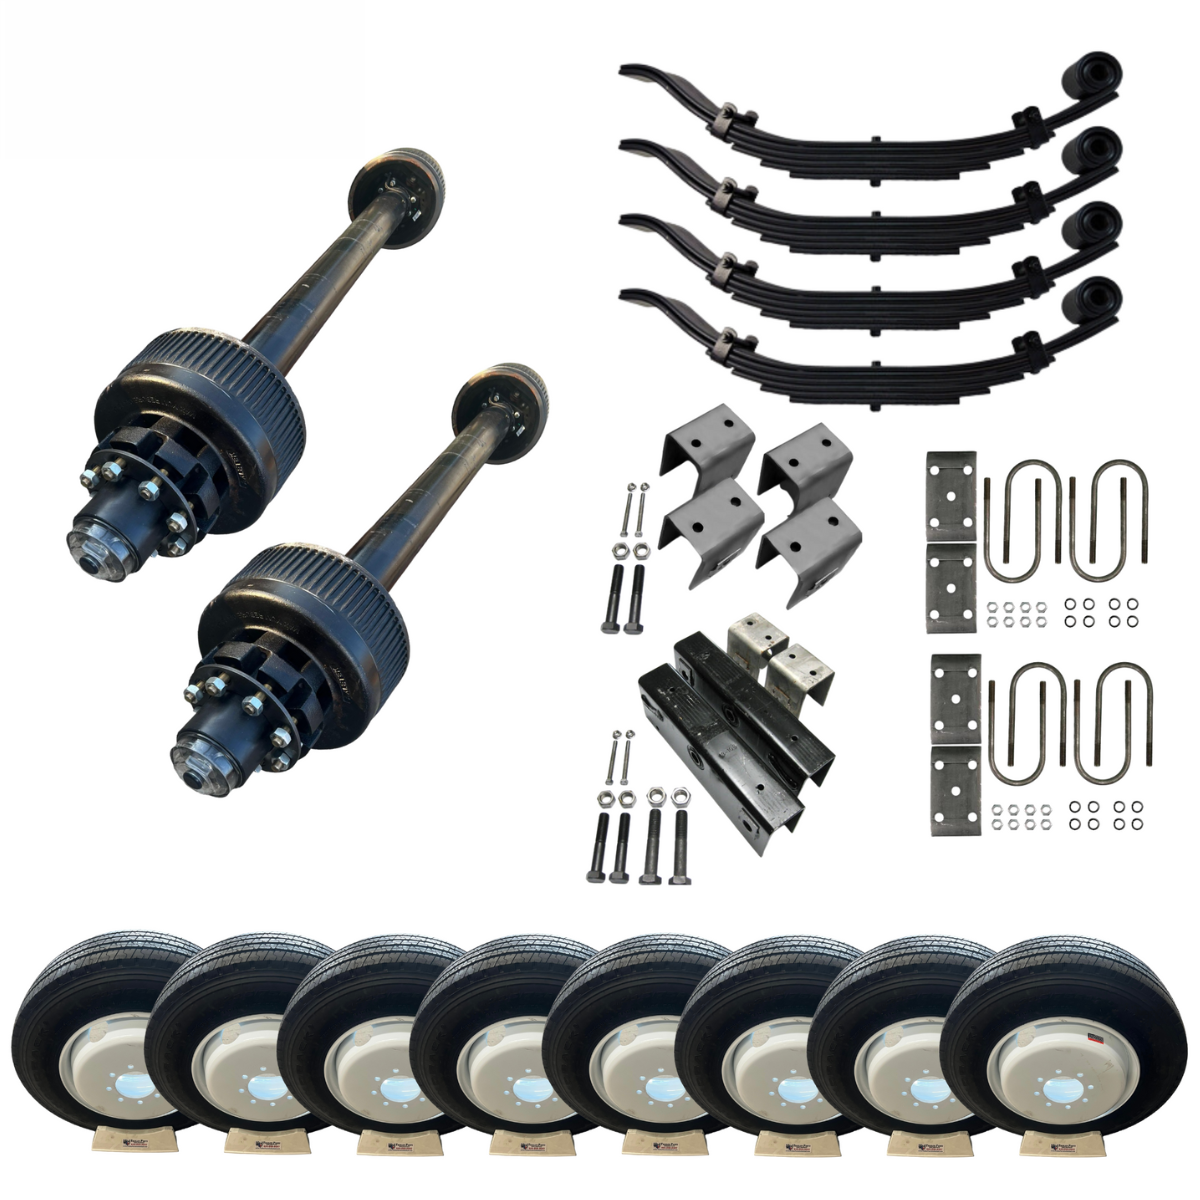 12,000 lb Carter Triple Trailer Axle Tire Wheel Kit - 16" Black Duals